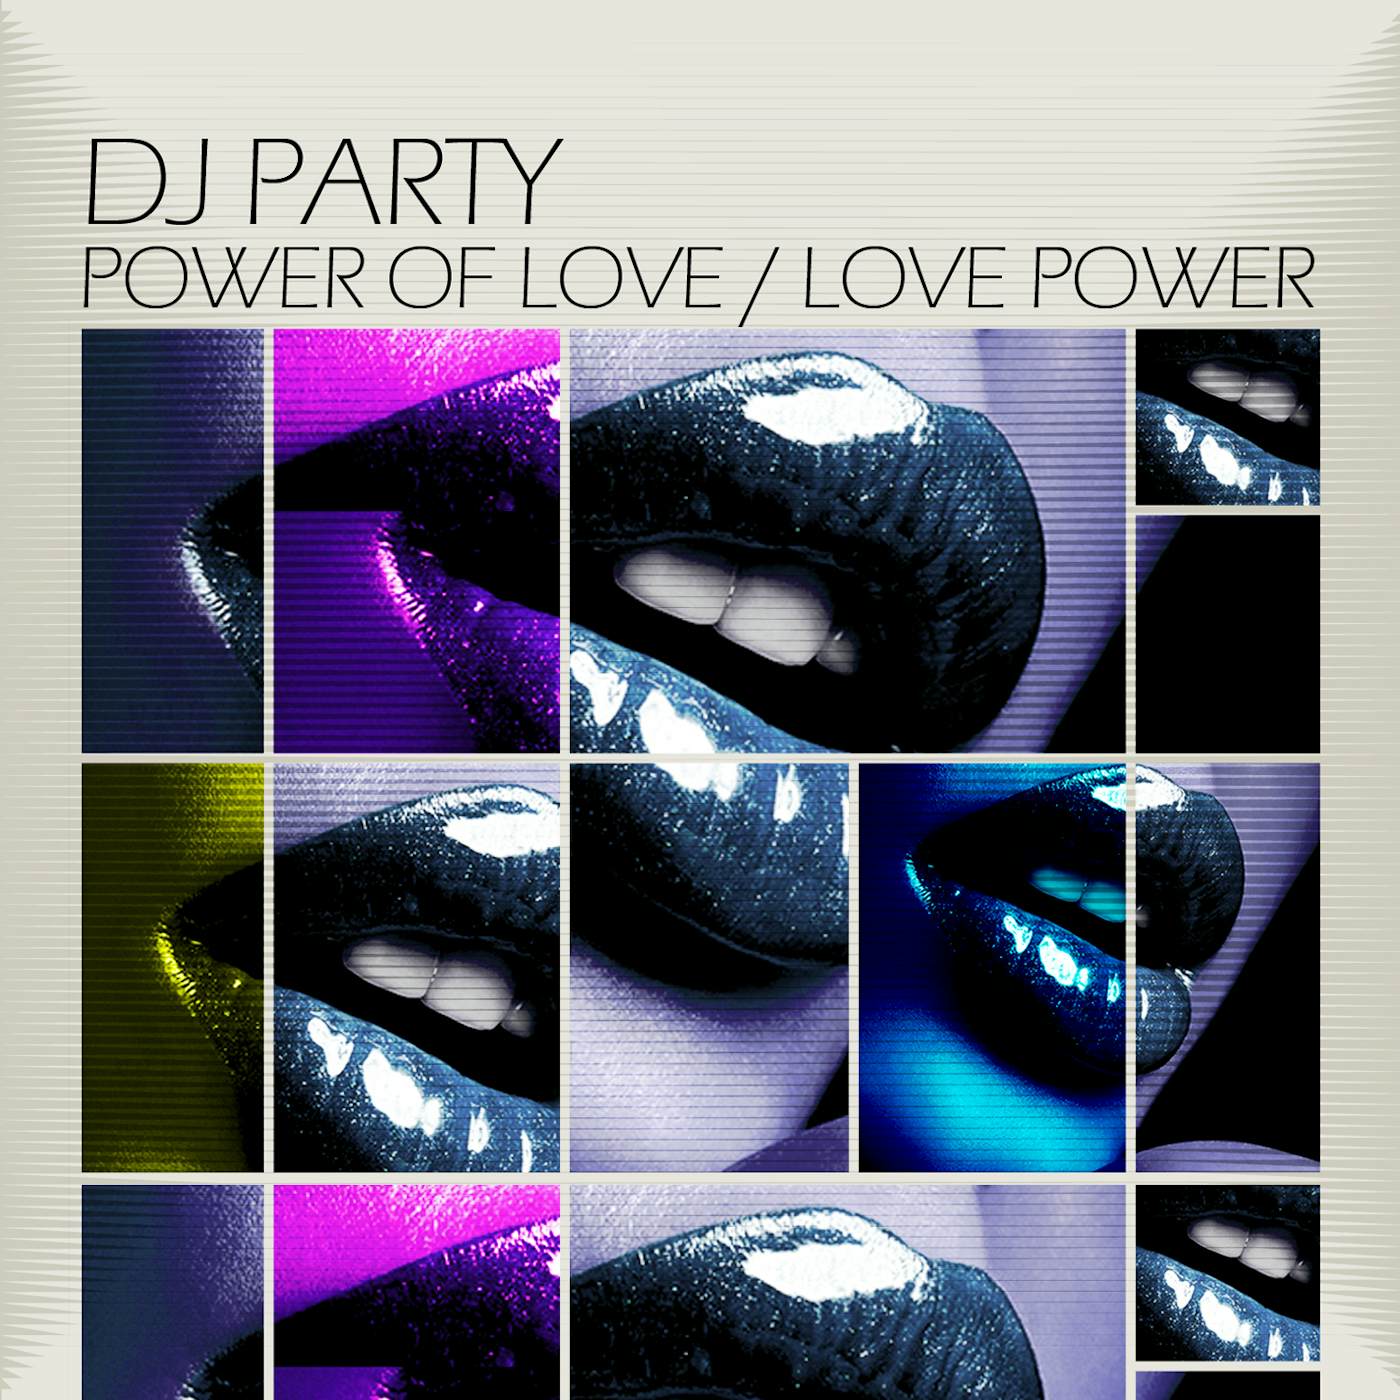 DJ Party POWER OF LOVE / LOVE POWER CD